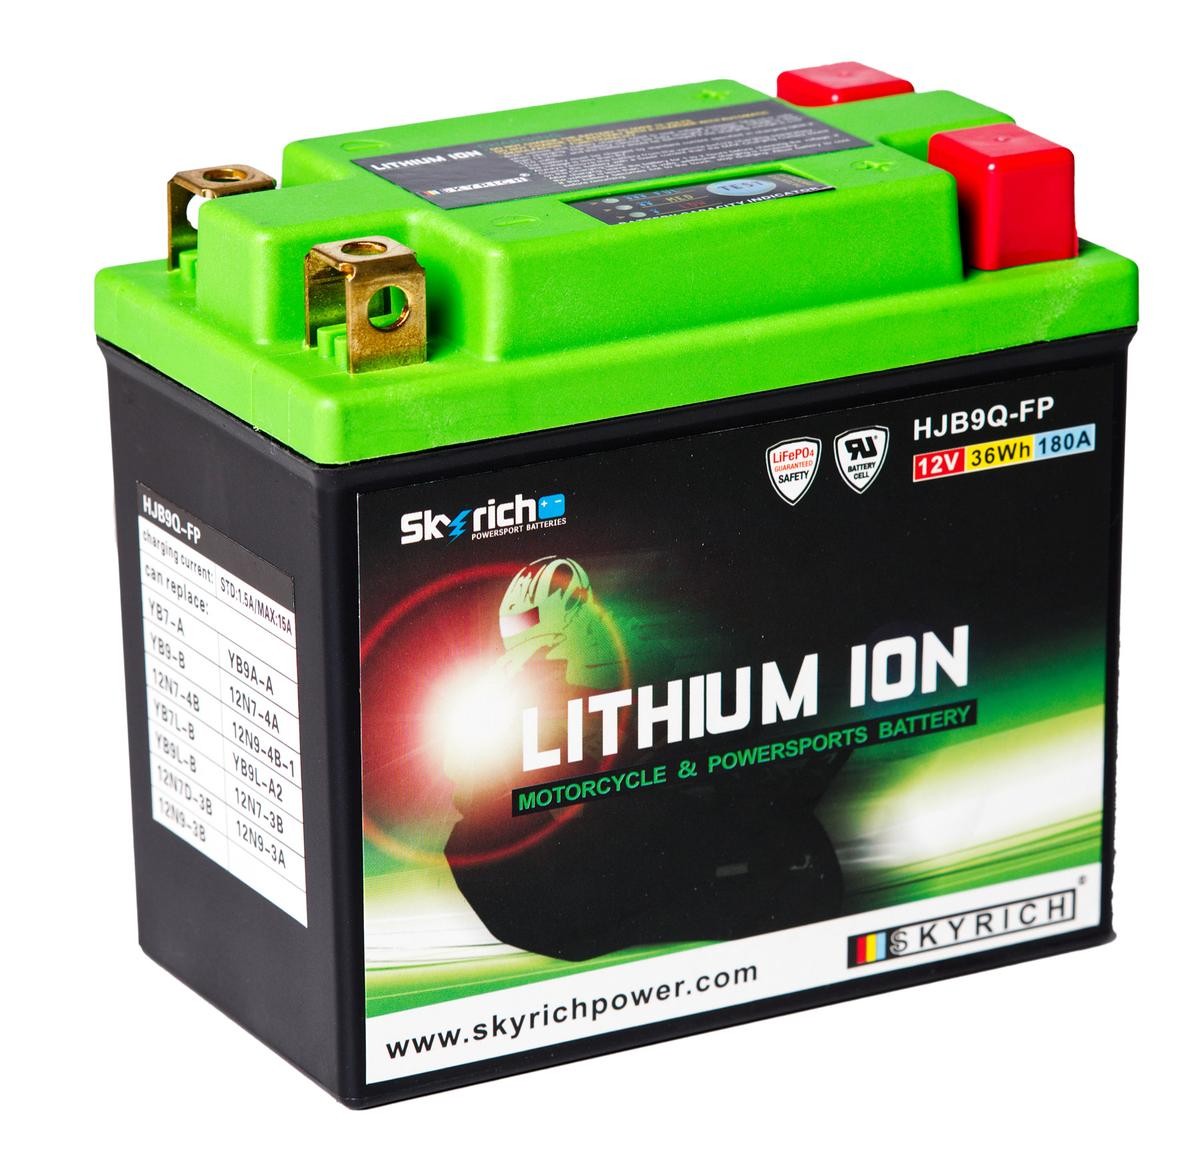 KTM 80 Batterie 12V 3Ah 180A N Li-Ionen-Batterie SKYRICH LITHIUM ION HJB9Q-FP